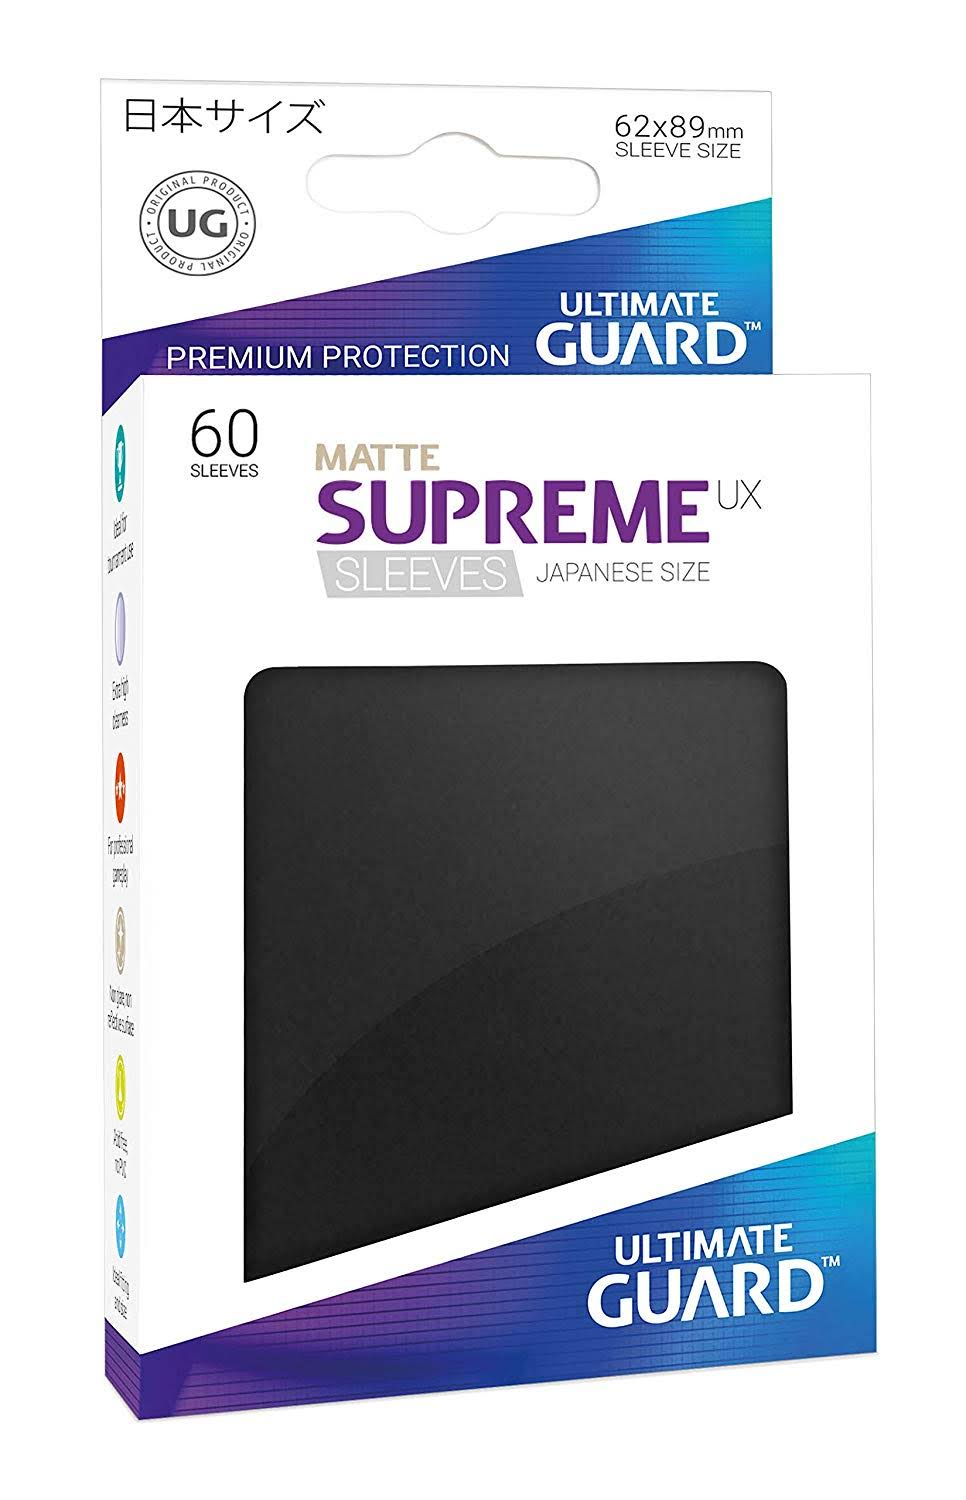 Guard Supreme UX Sleeves - Japanese Size, Matte Black, 60ct, Ultimate Guard